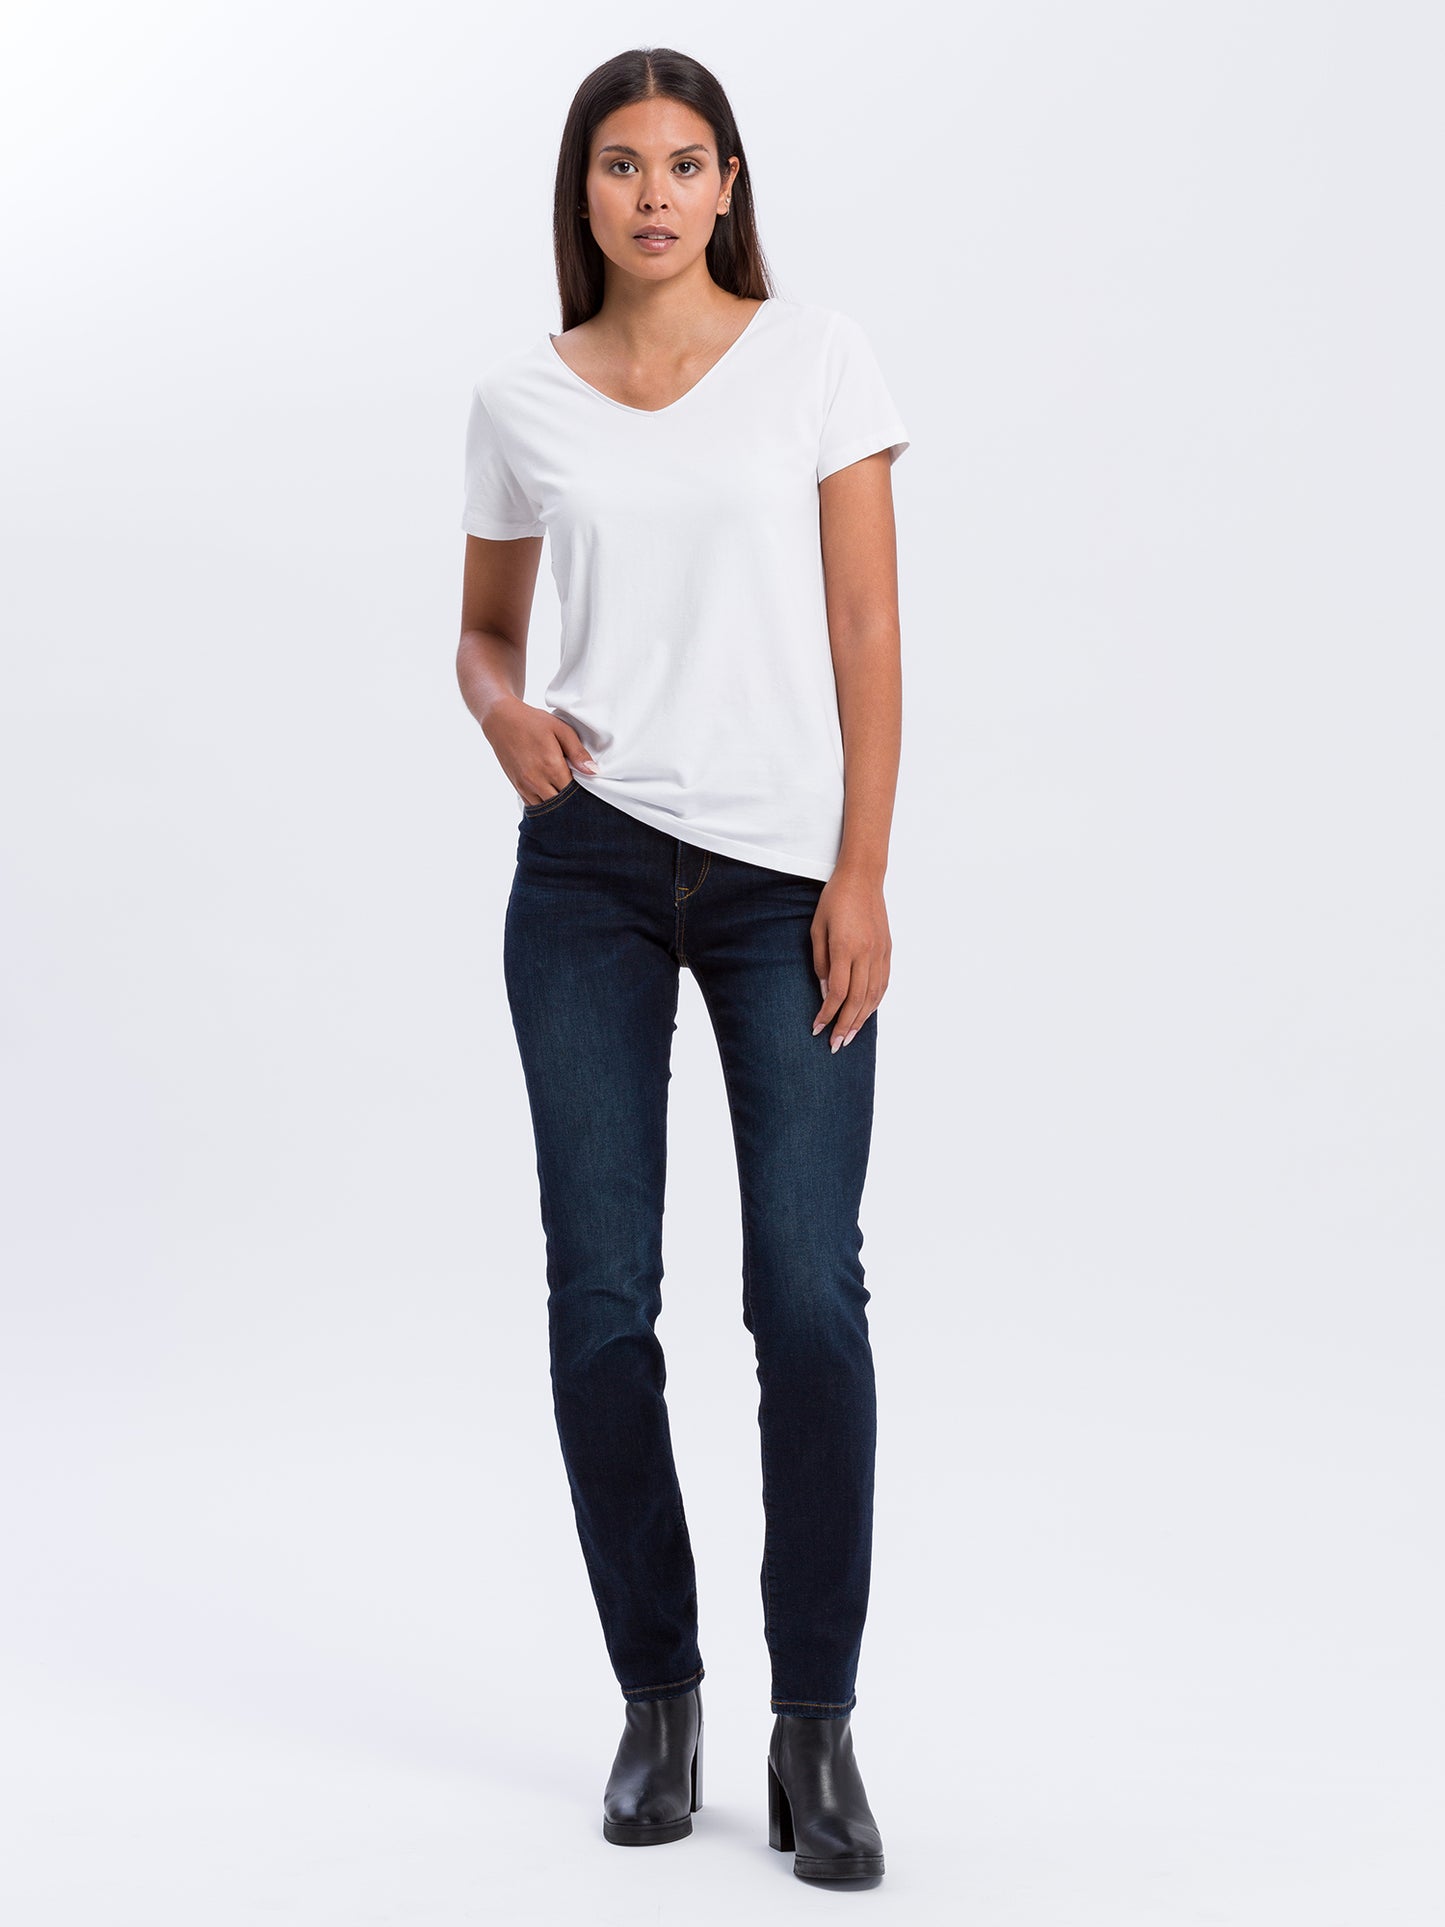 Anya women's jeans slim fit high waist dark blue